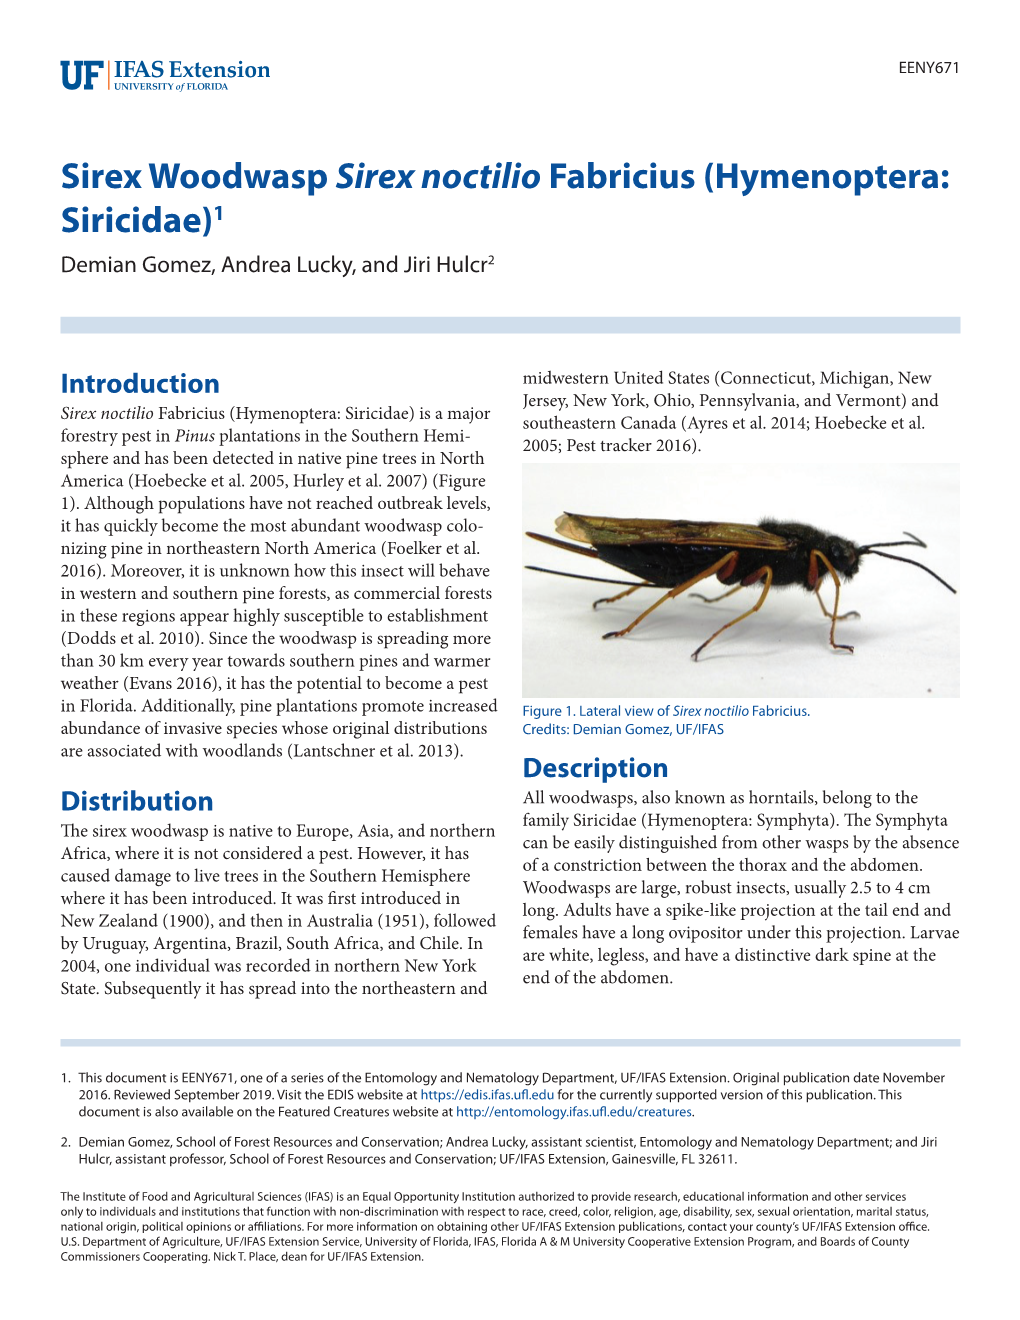 Sirex Woodwasp Sirex Noctilio Fabricius (Hymenoptera: Siricidae)1 Demian Gomez, Andrea Lucky, and Jiri Hulcr2